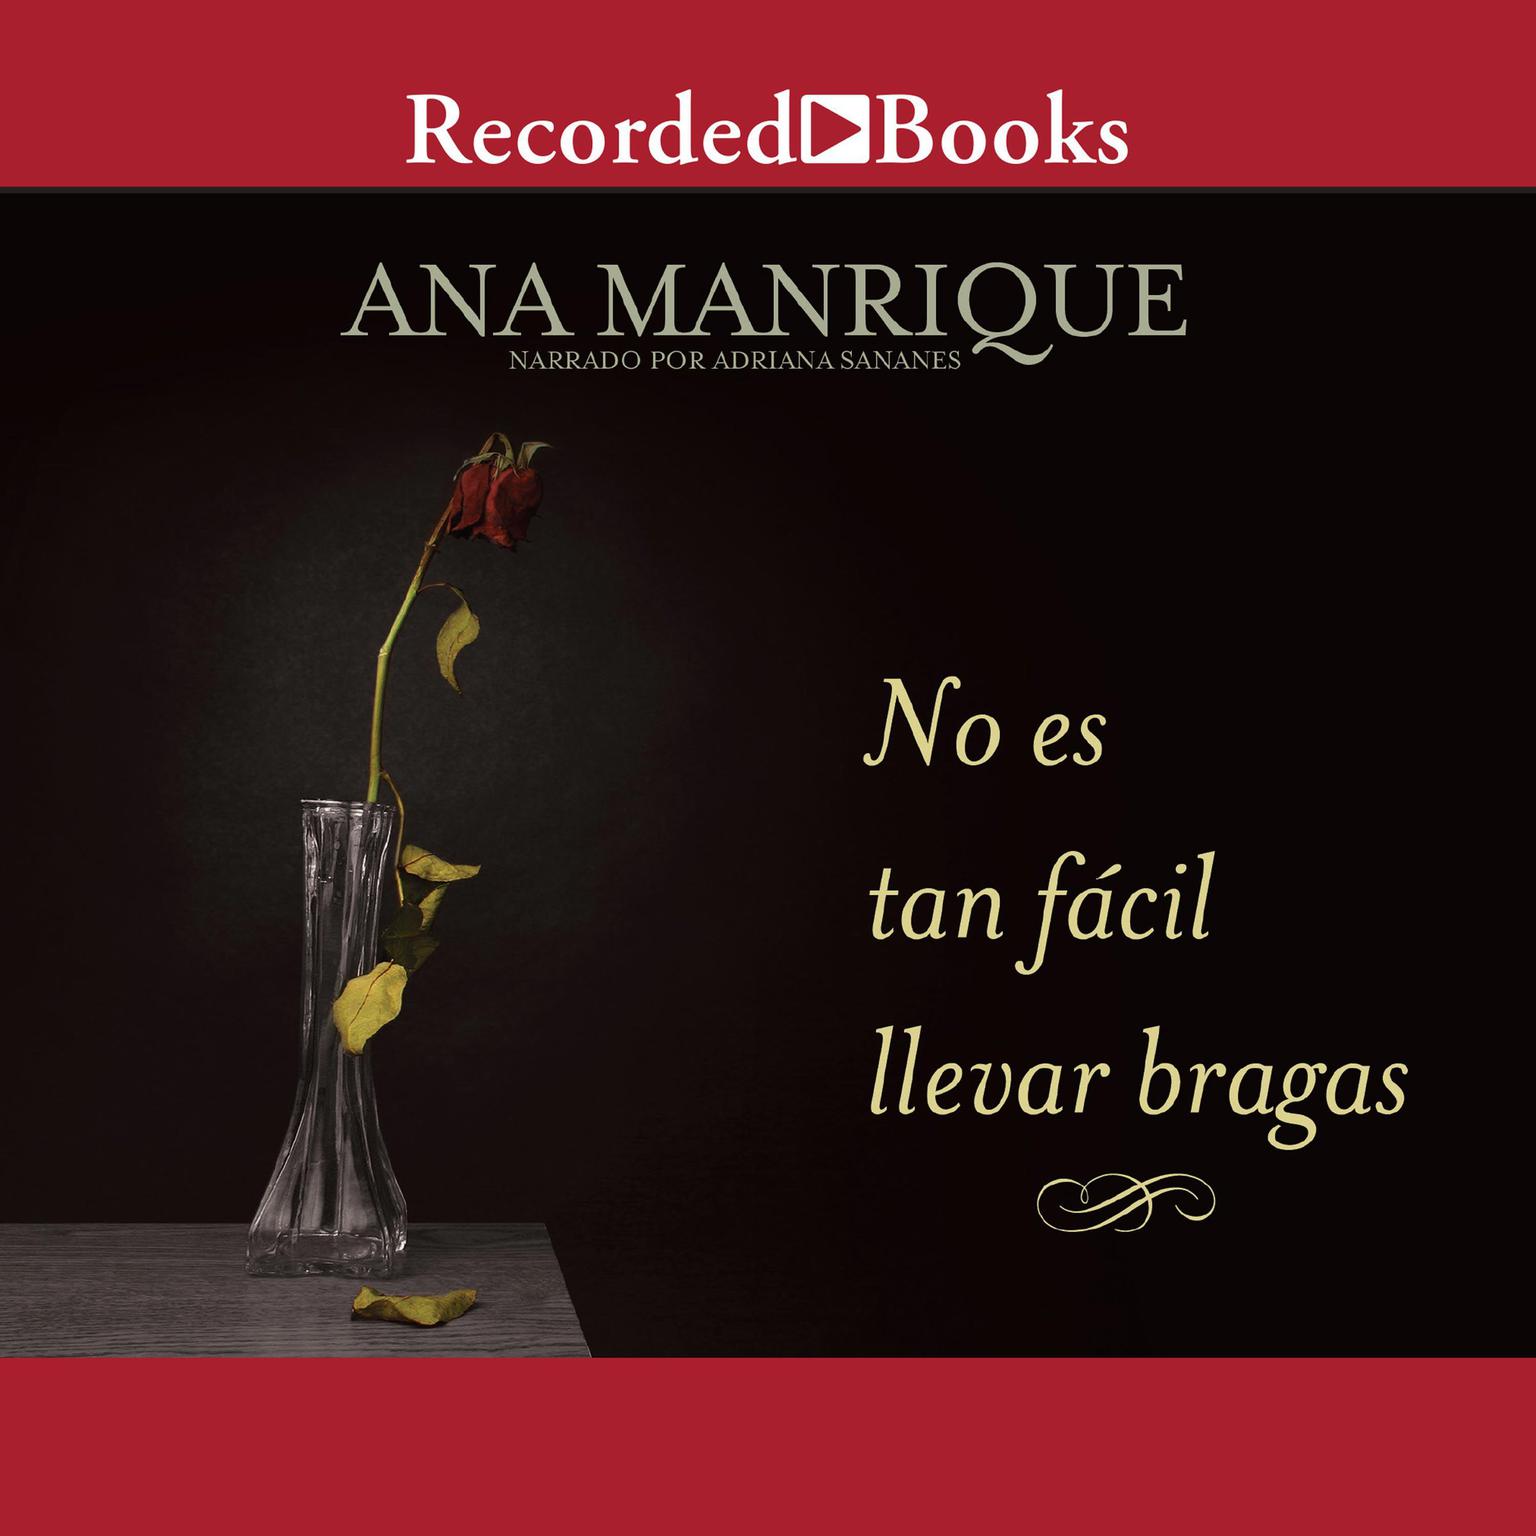 No es tan facil llevar bragas (Its Not So Easy Wearing Panties) Audiobook, by Ana Manrique